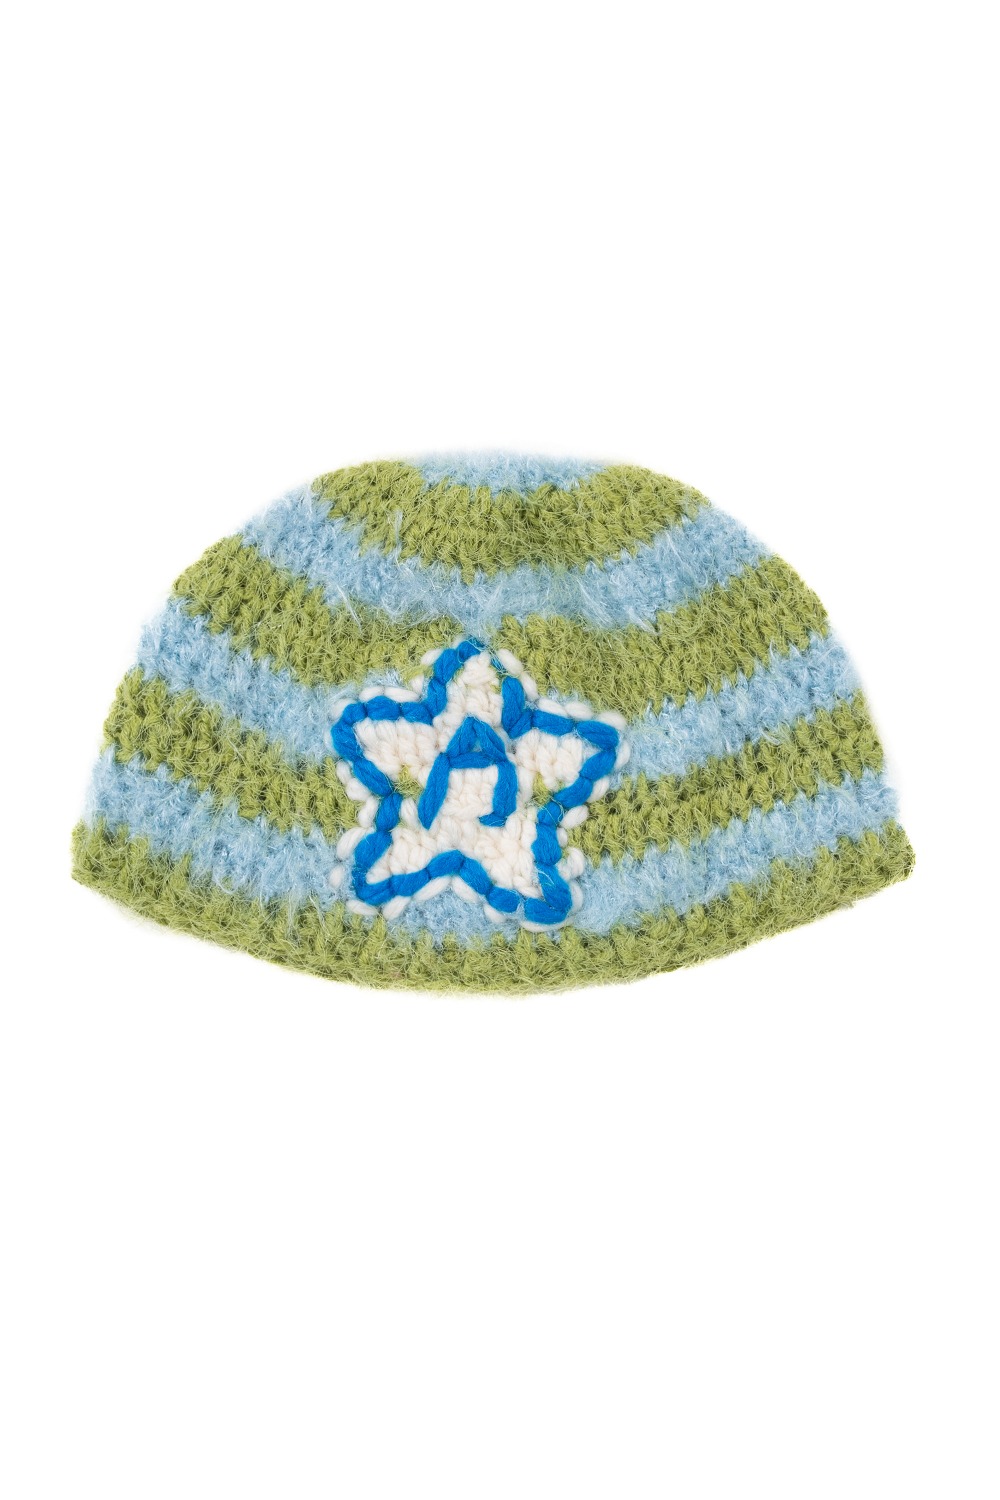 Star crochet beanie (BLUE)